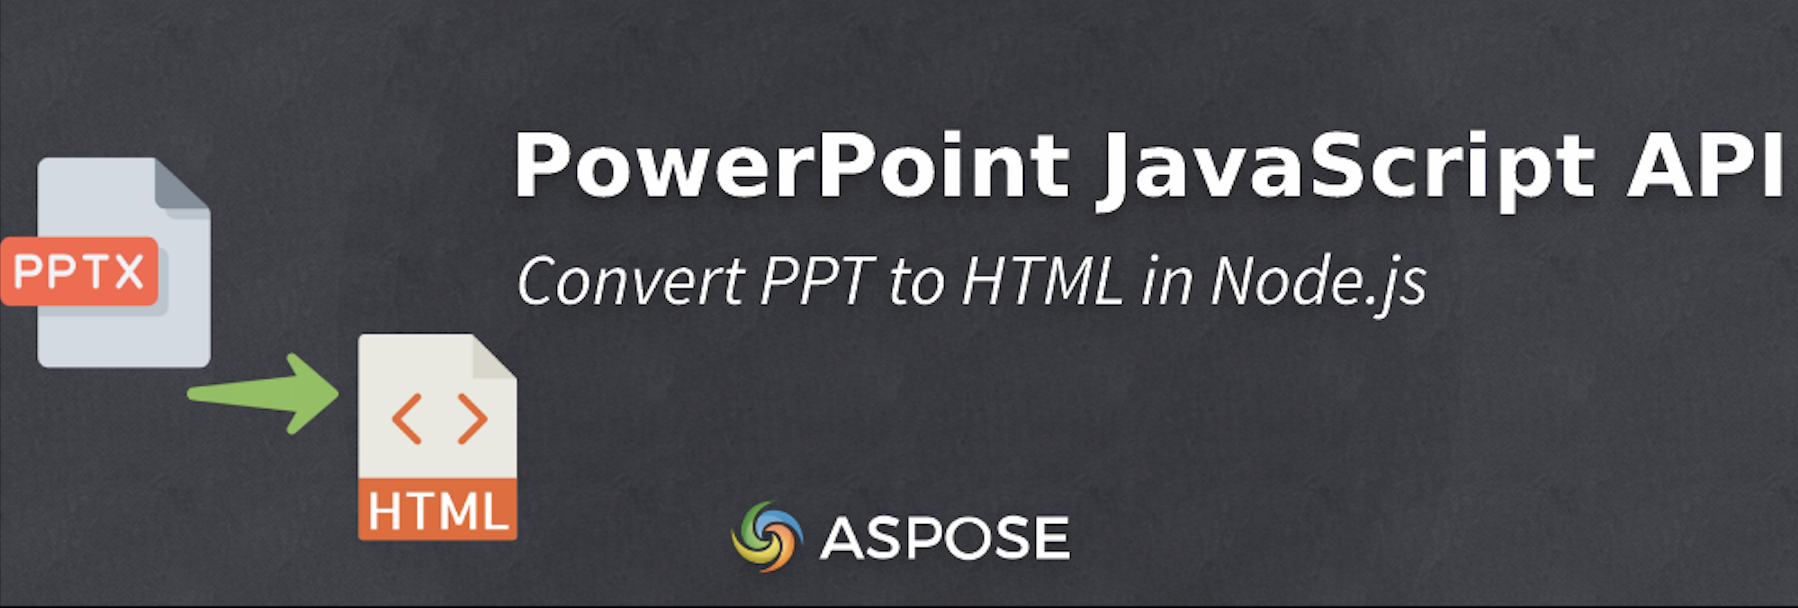 Chuyển đổi PPT sang HTML trong Node.js - API JavaScript của PowerPoint